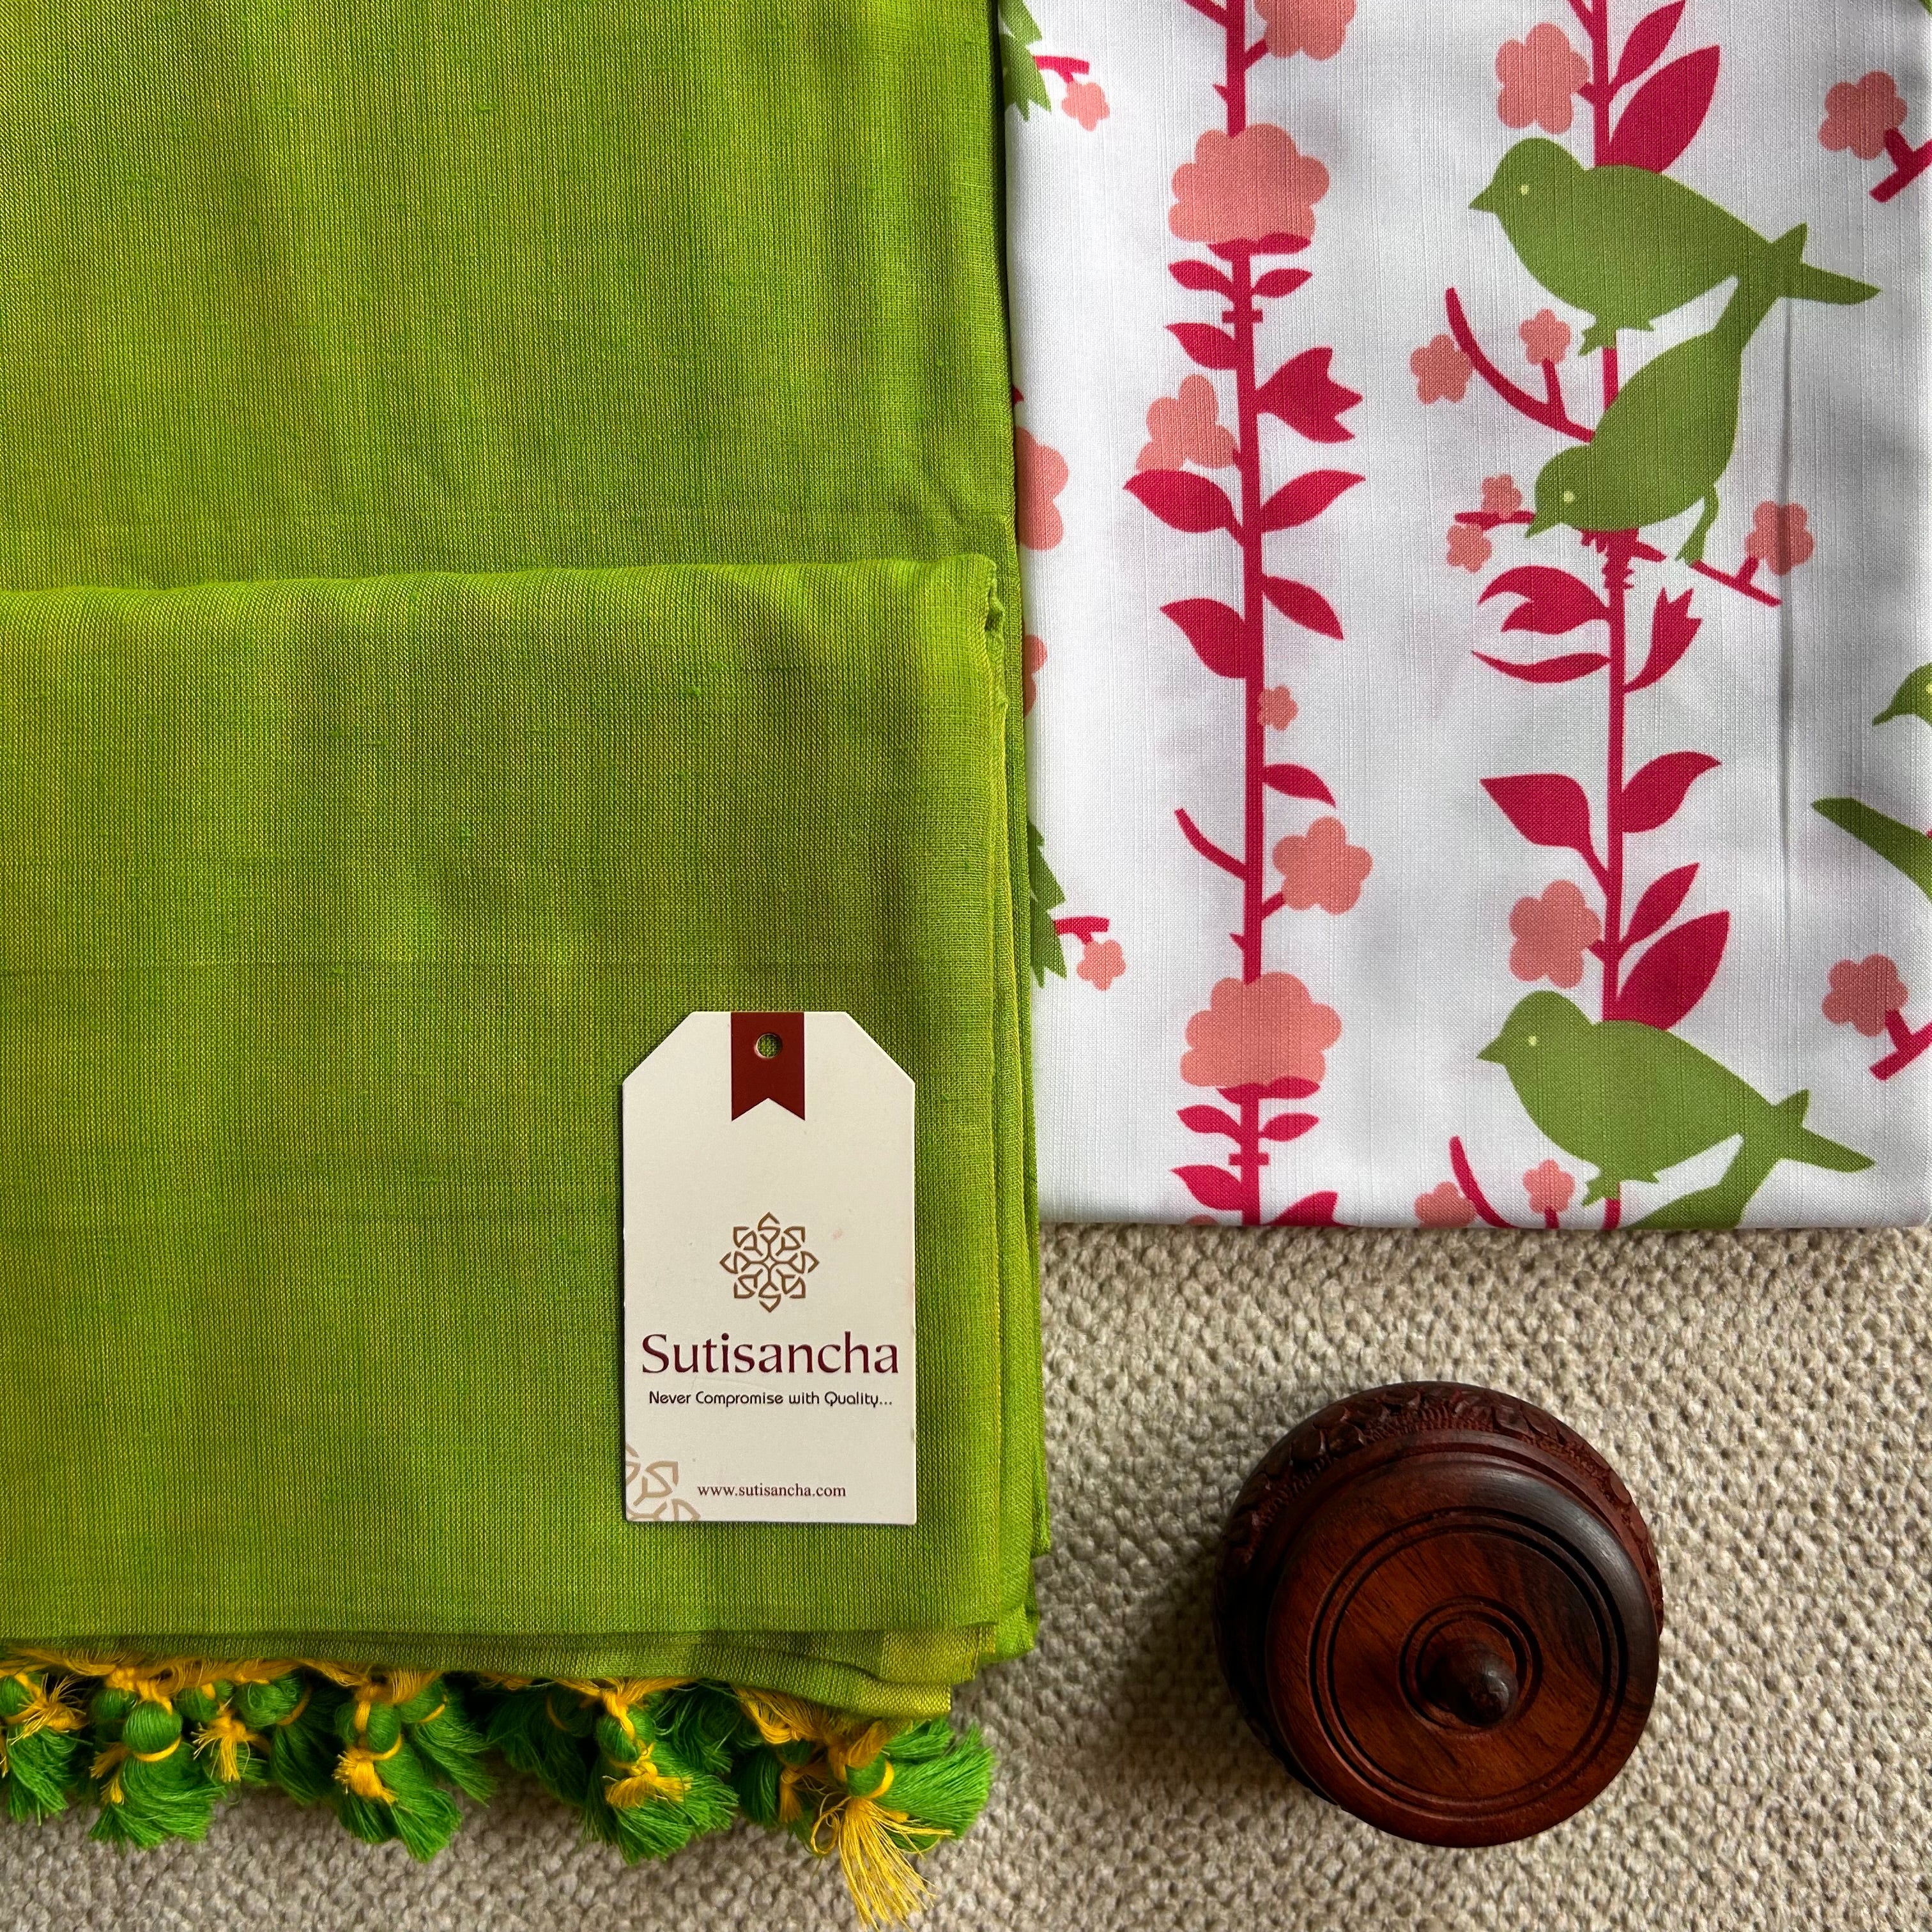 Sutisancha Parrot Handloom Cotton Saree with Parrot Design Blouse